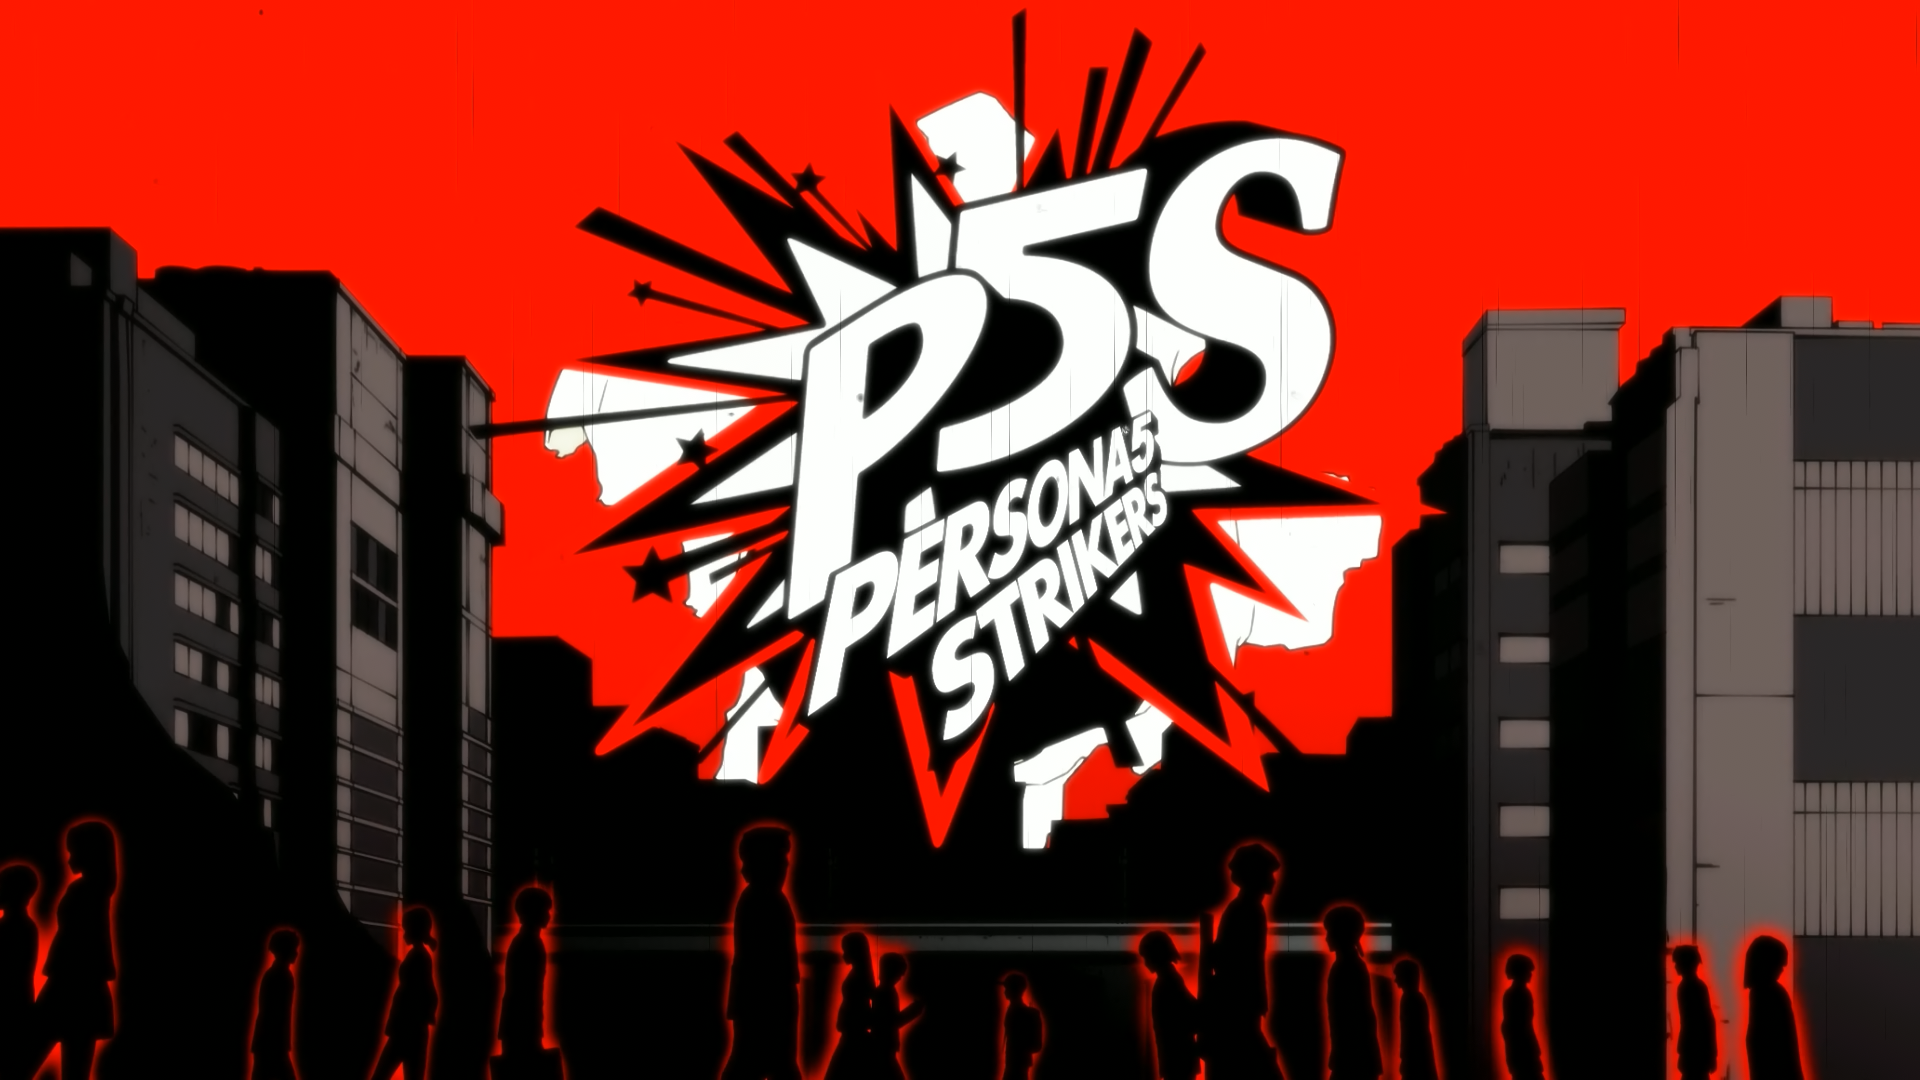 Persona 5 Strikers Review - RPGamer